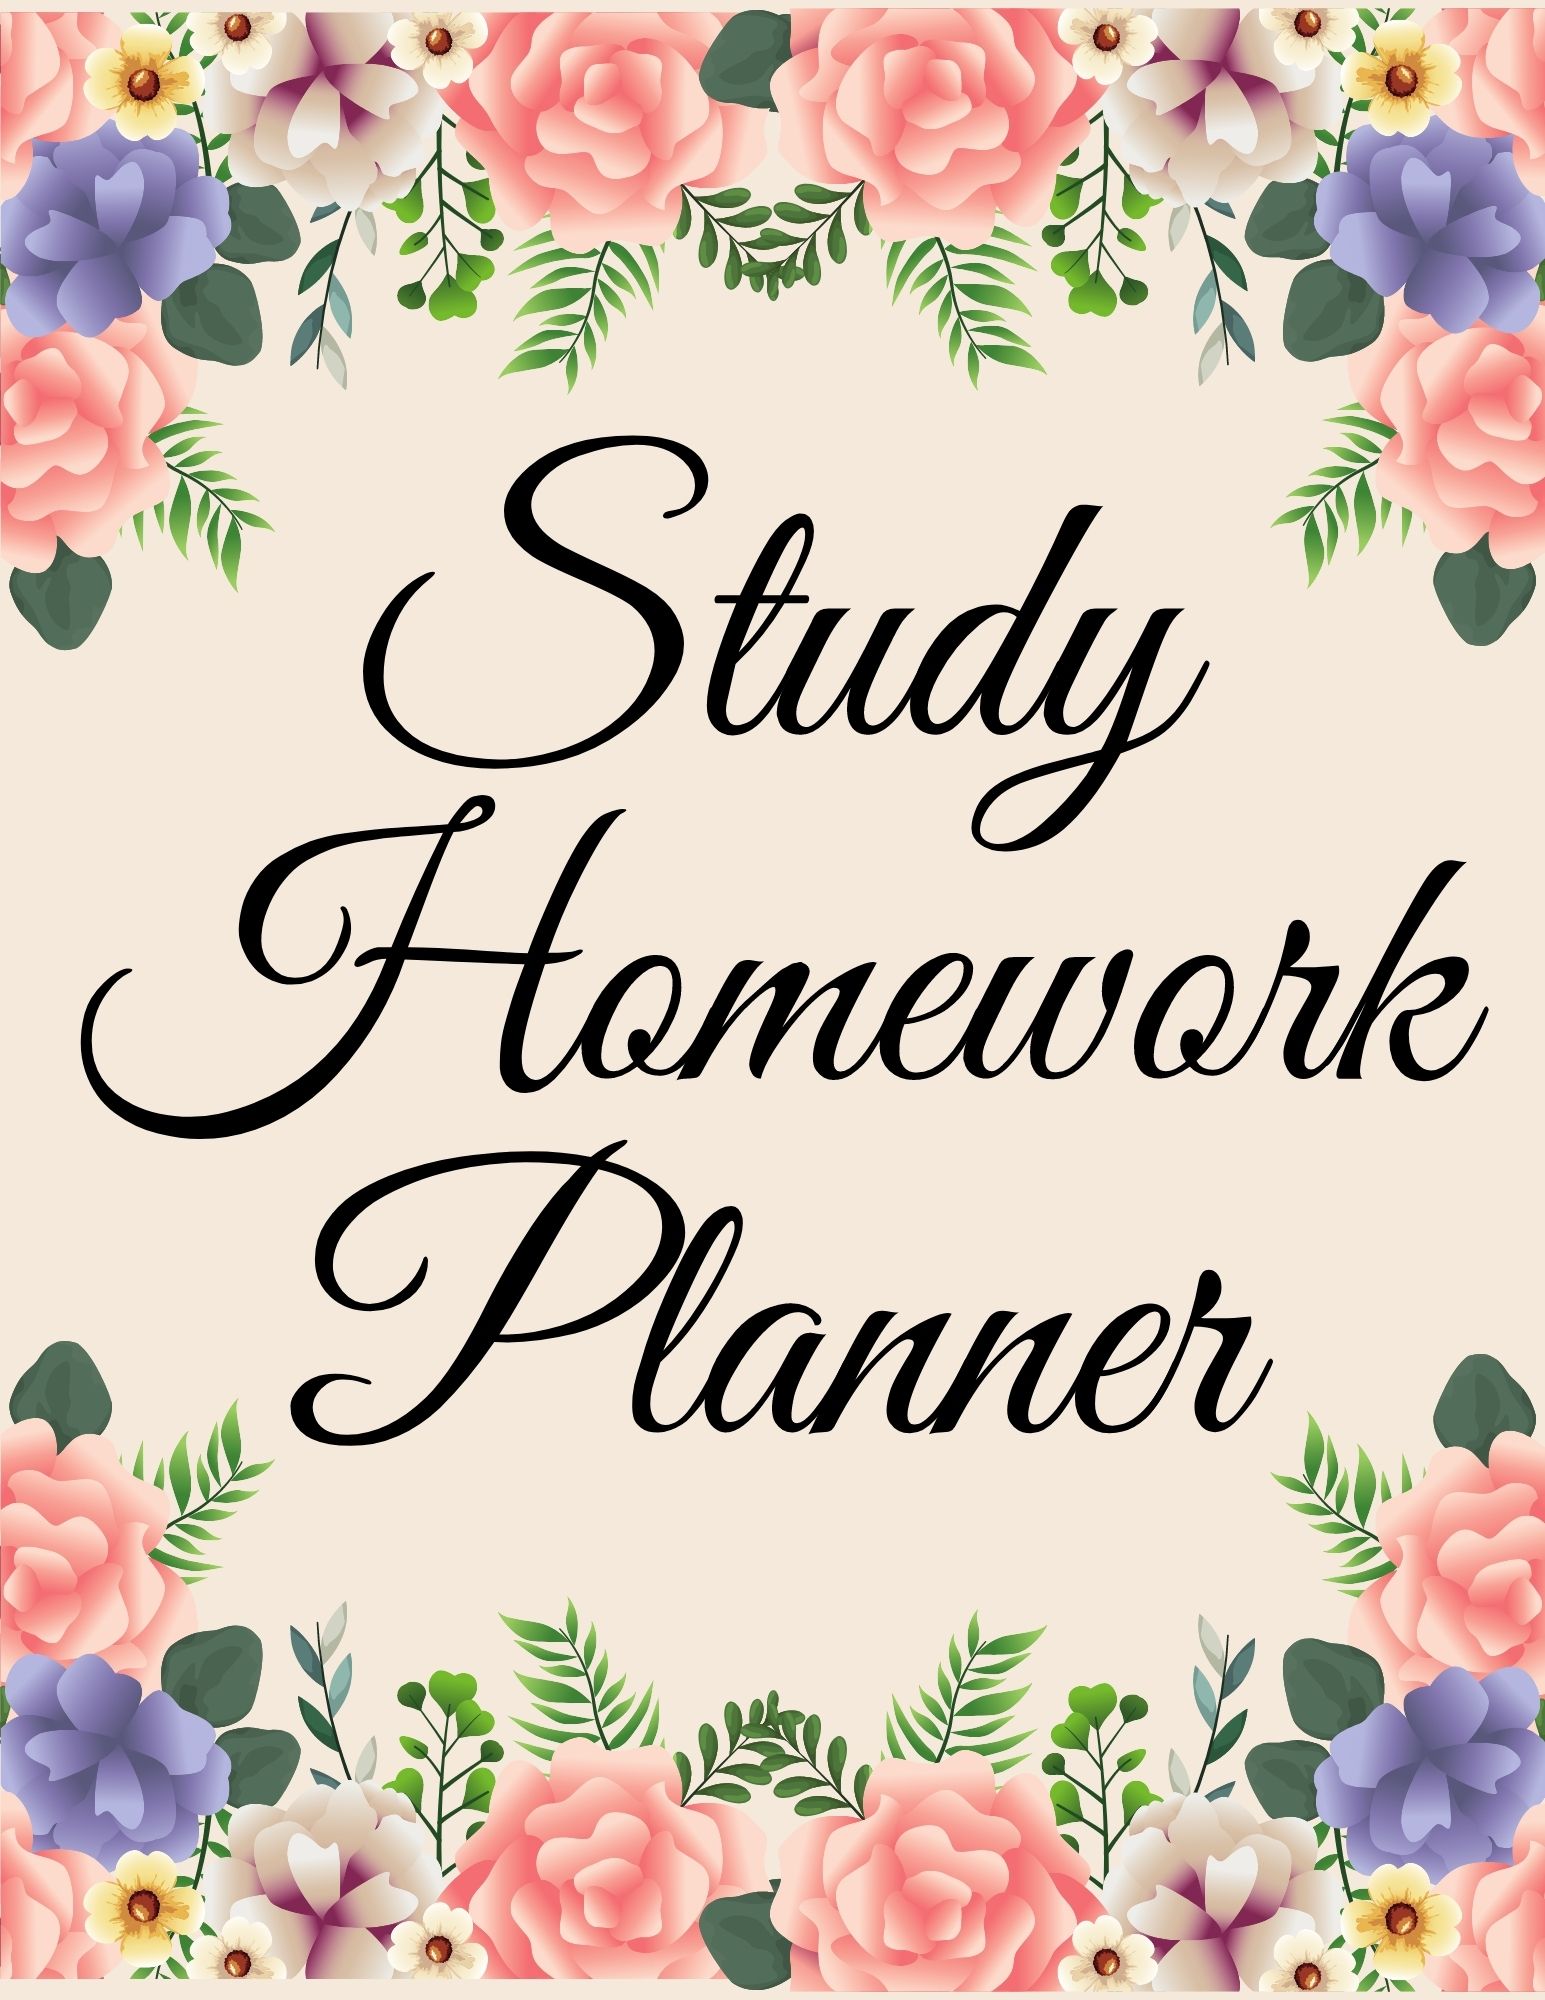 my homework study planner